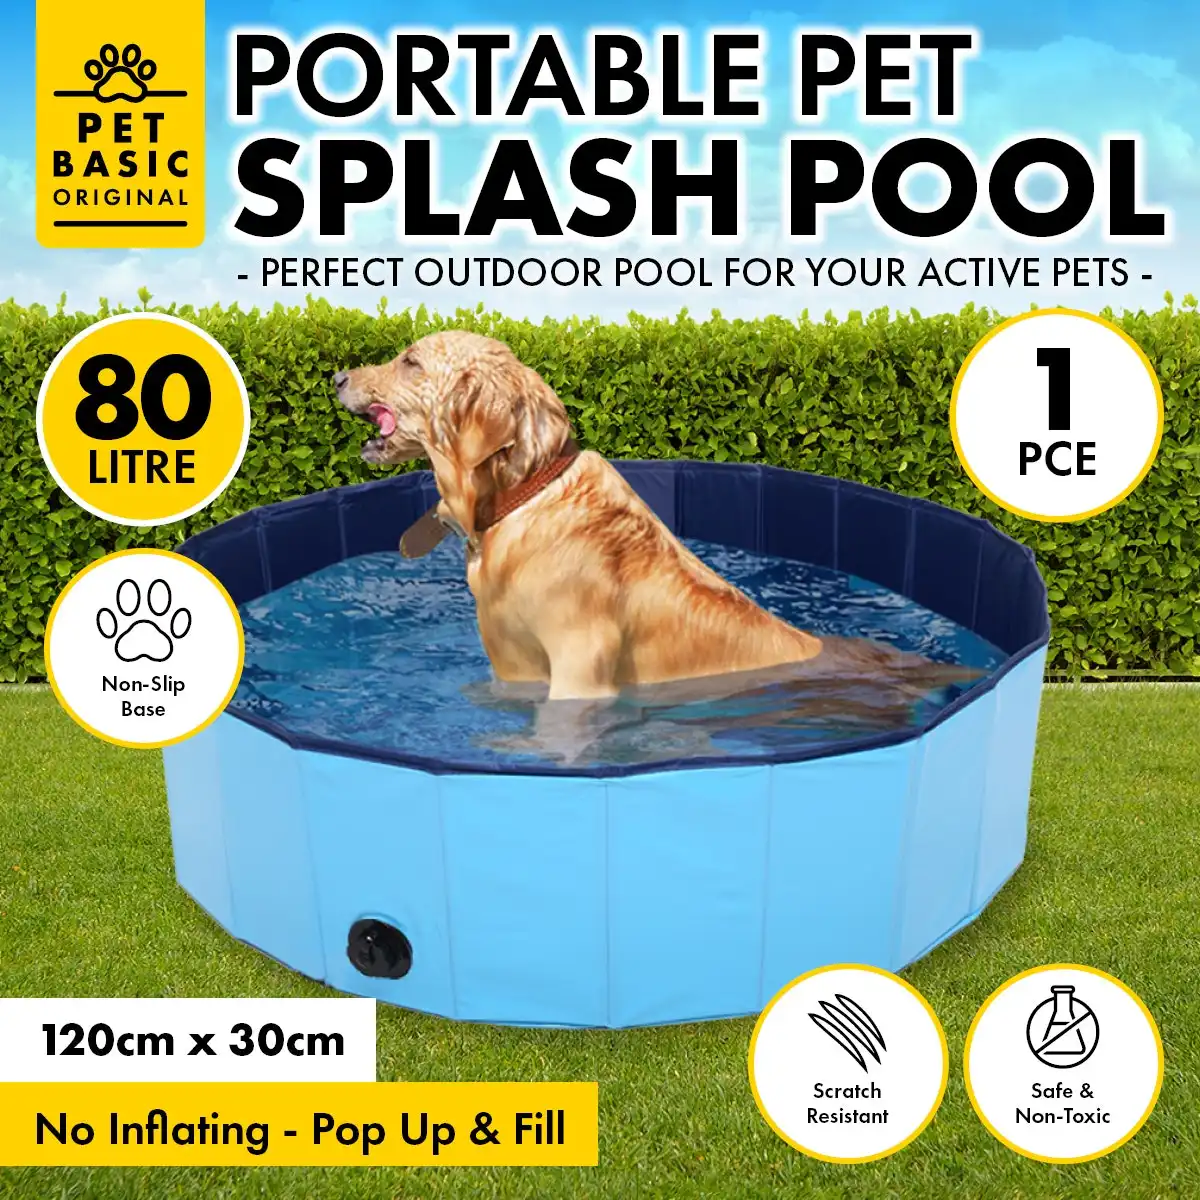 Pet Basic® 80L Pet Pool Collapsible Portable Non-Slip Base High Quality 120cm